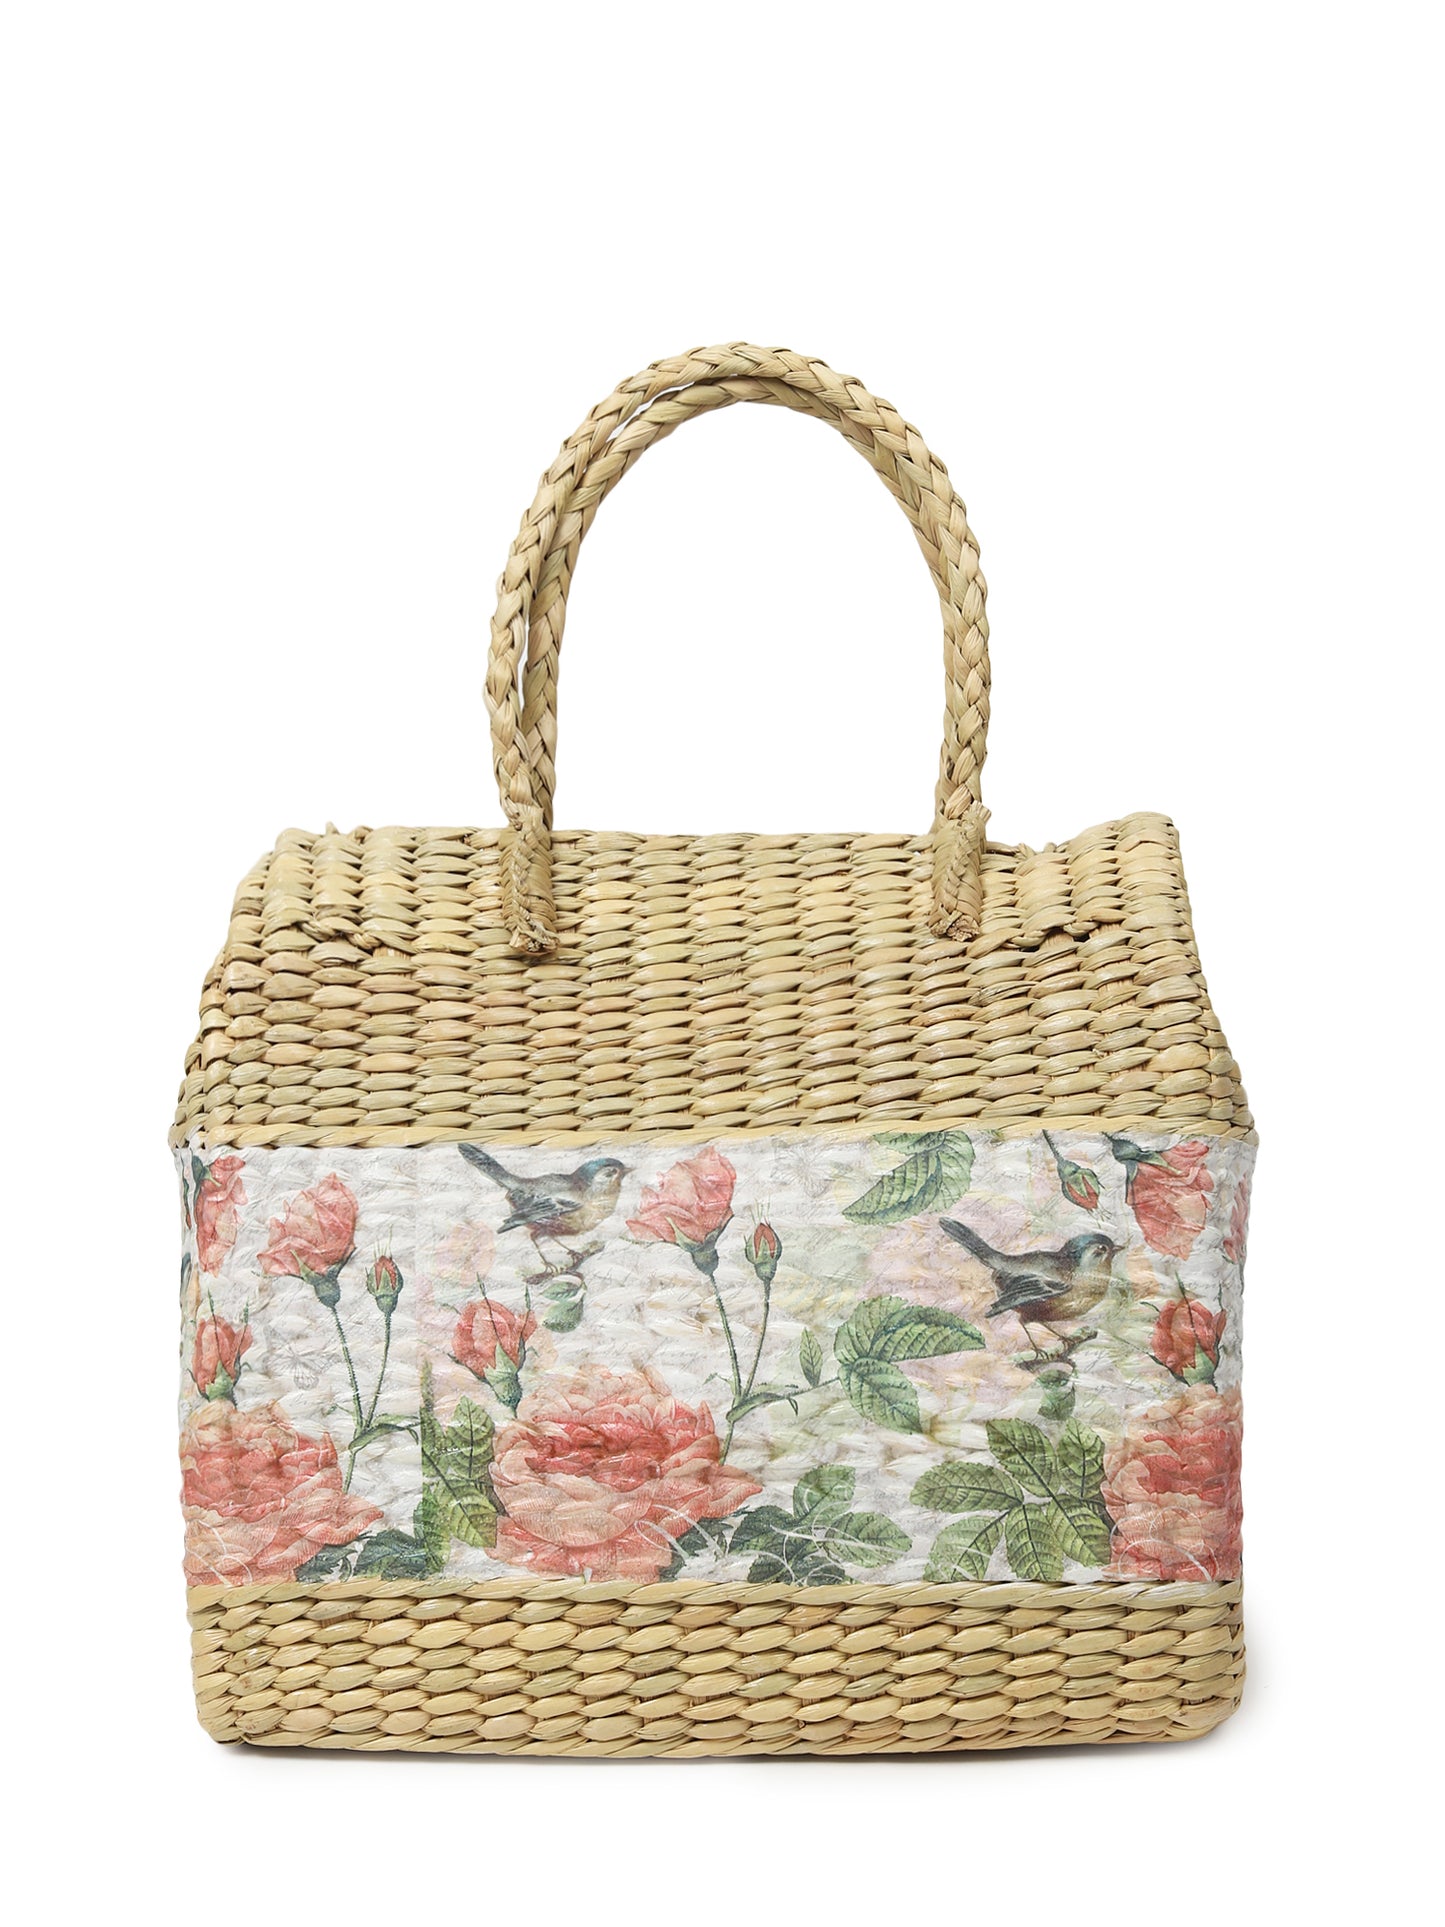 Travel Basket | Seagrass Large Picnic Basket